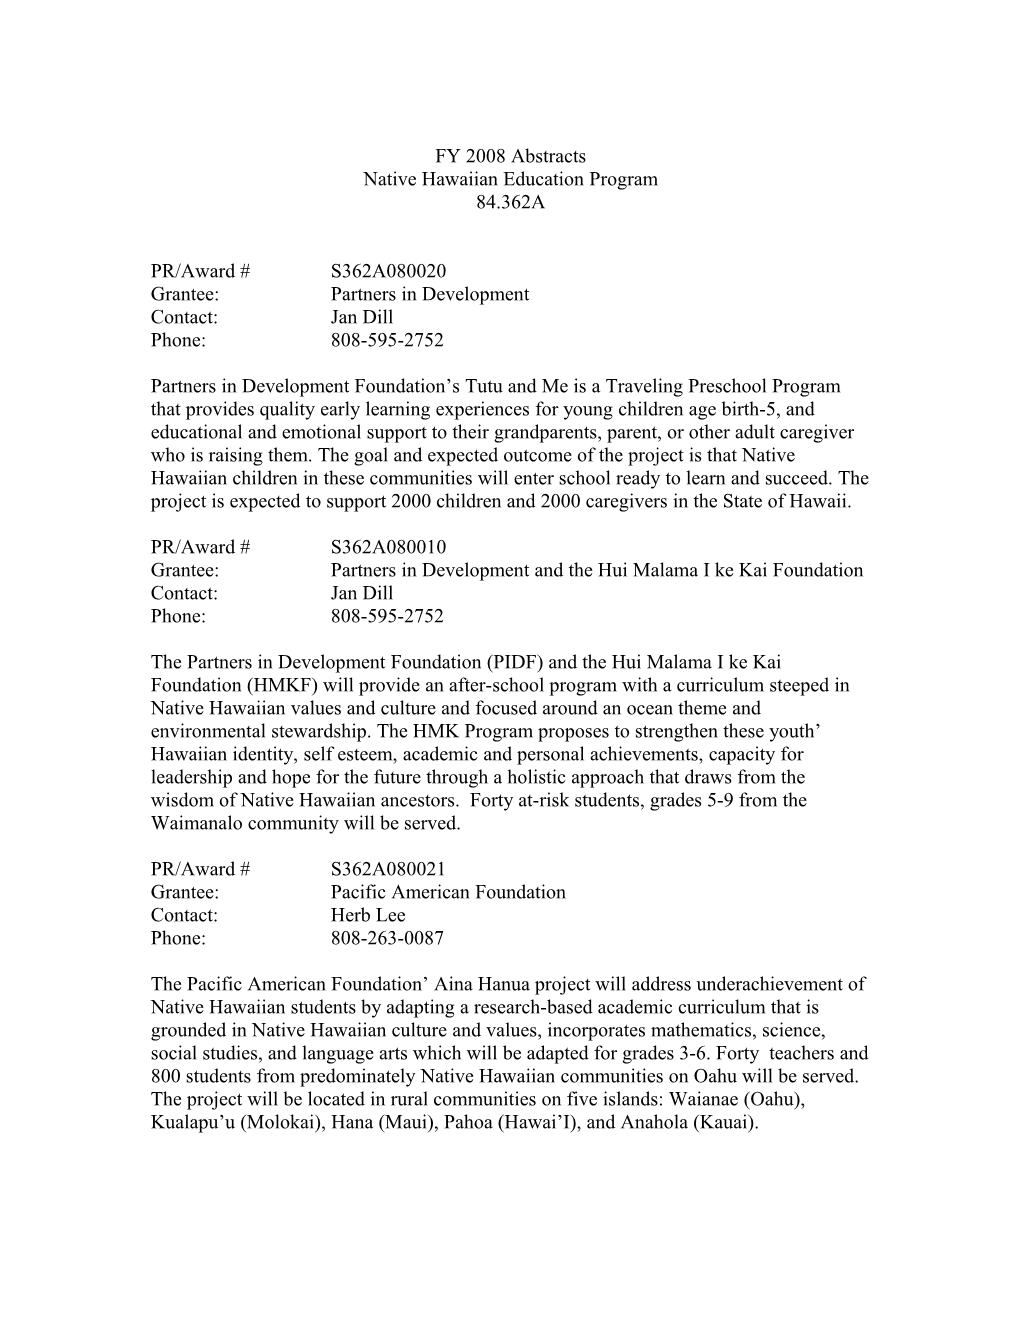 FY 2008 Native Hawaiian Education Programs Abstracts (MS WORD)